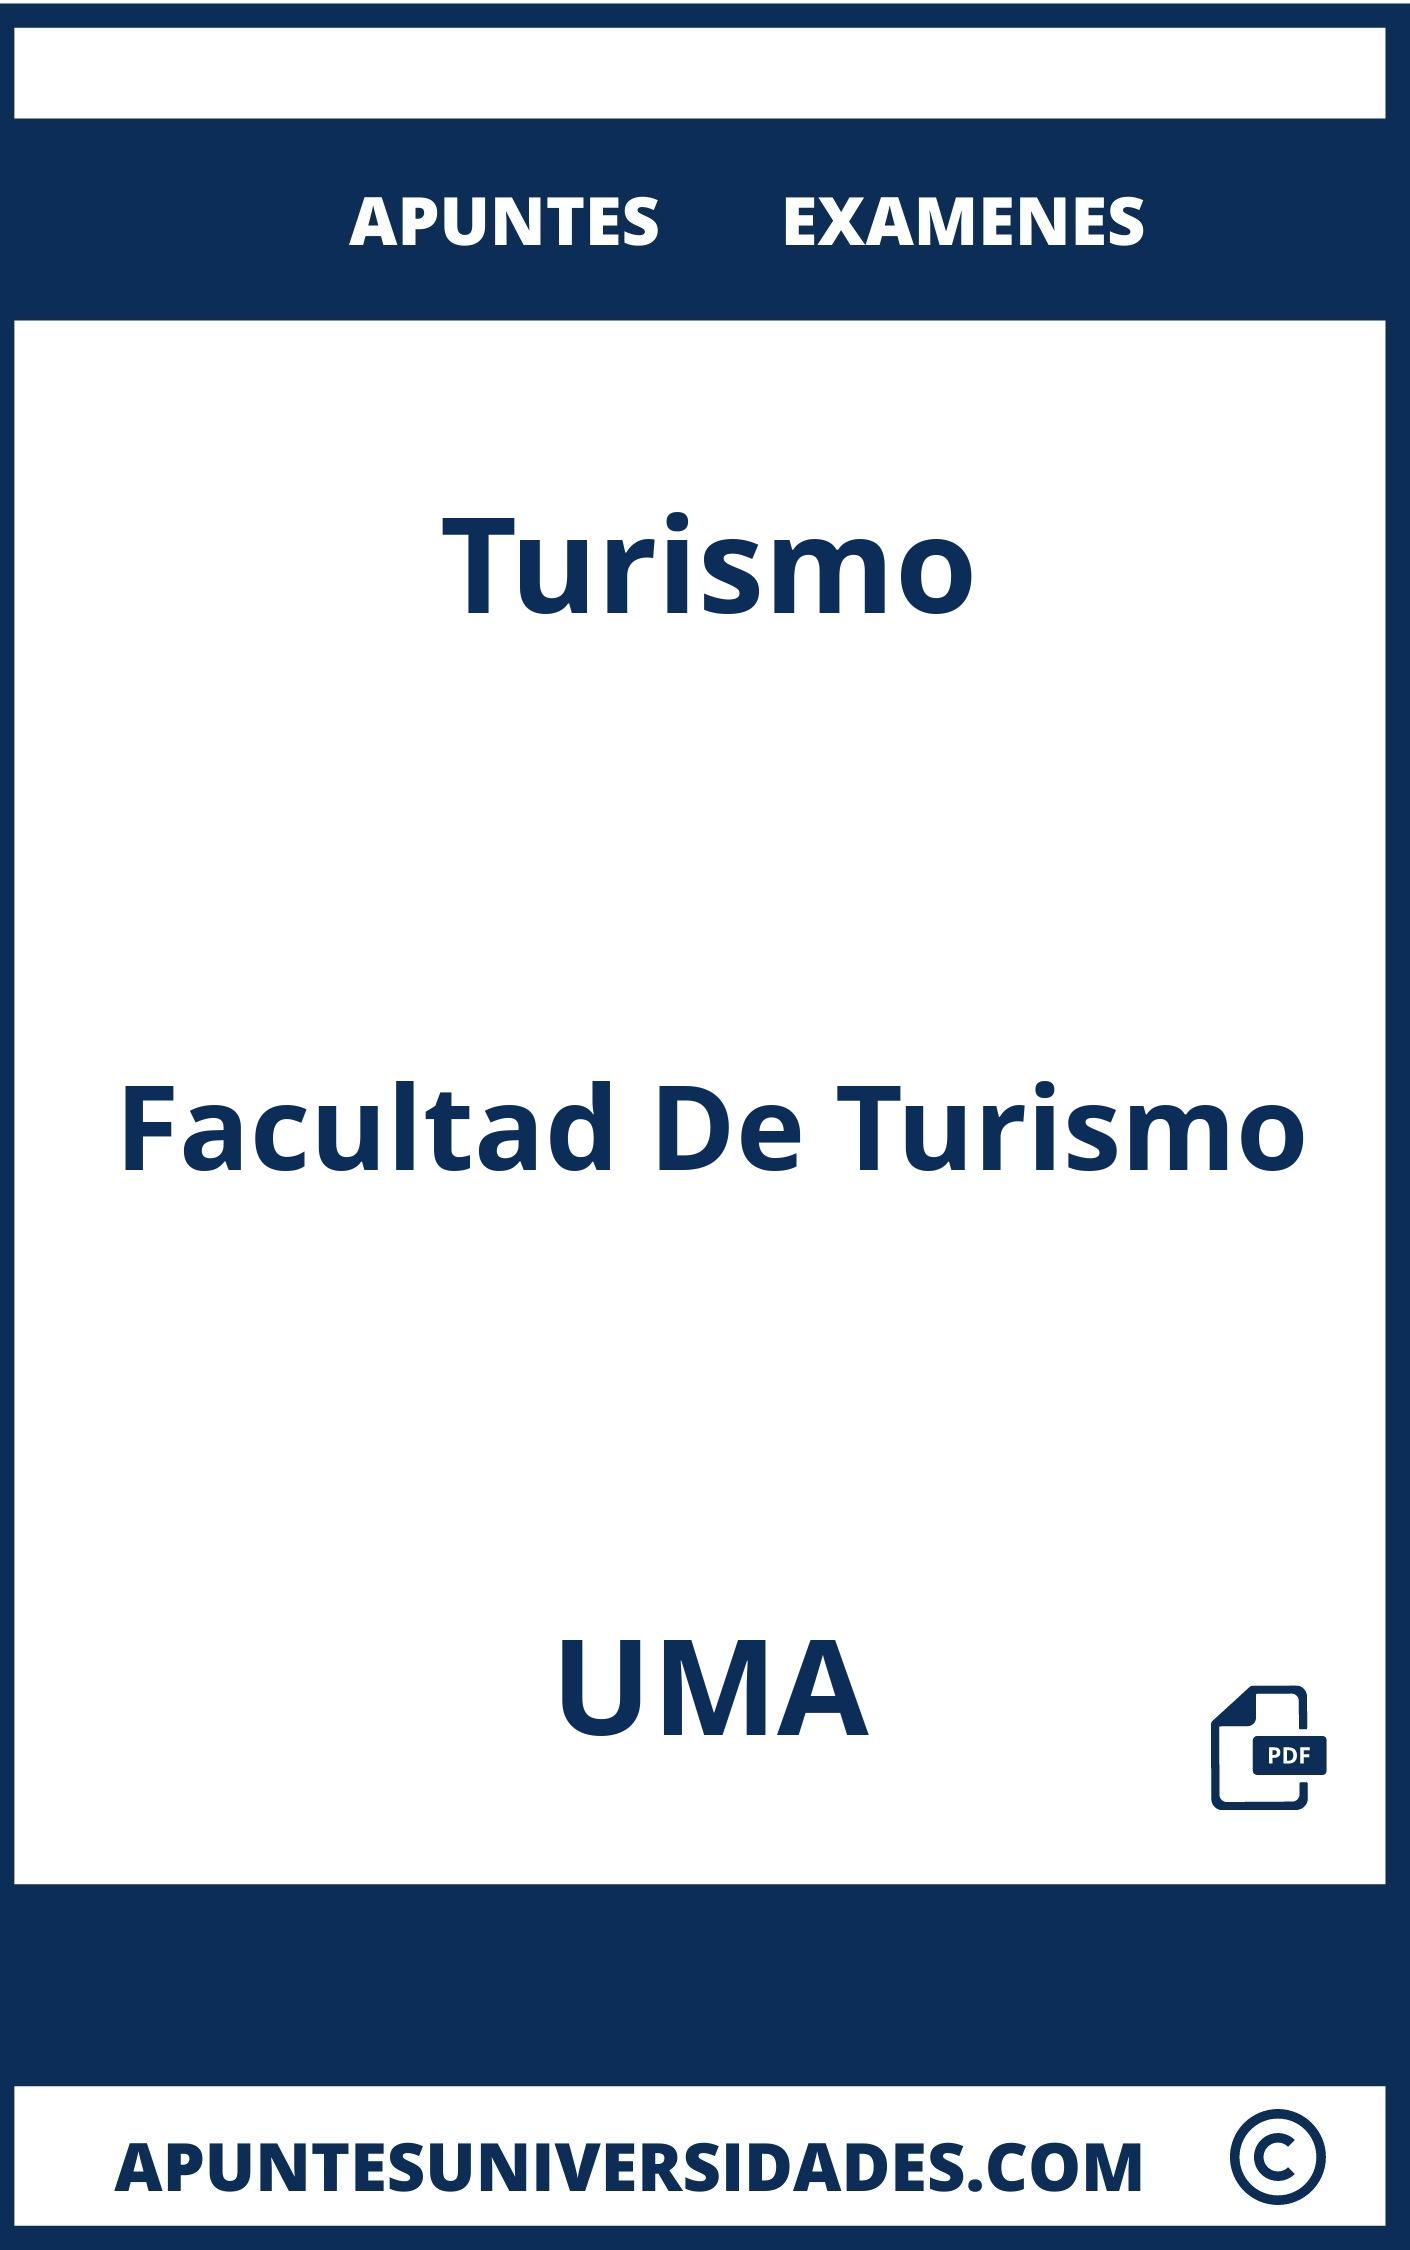 Apuntes y Examenes Turismo UMA